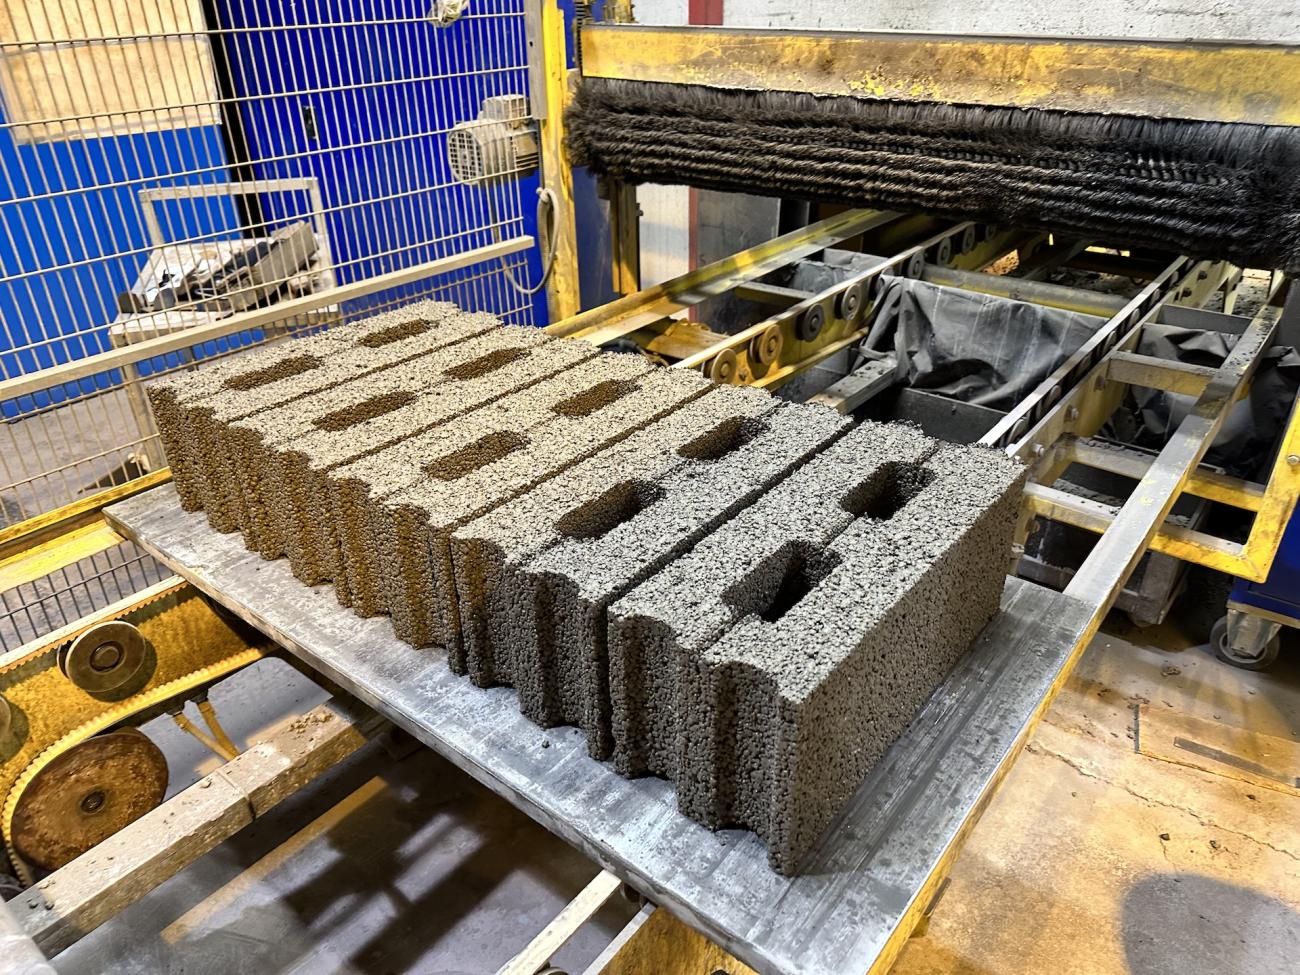 Carbonaided concrete blocks, showing carbon capture in action. Photo: Carbonaide.